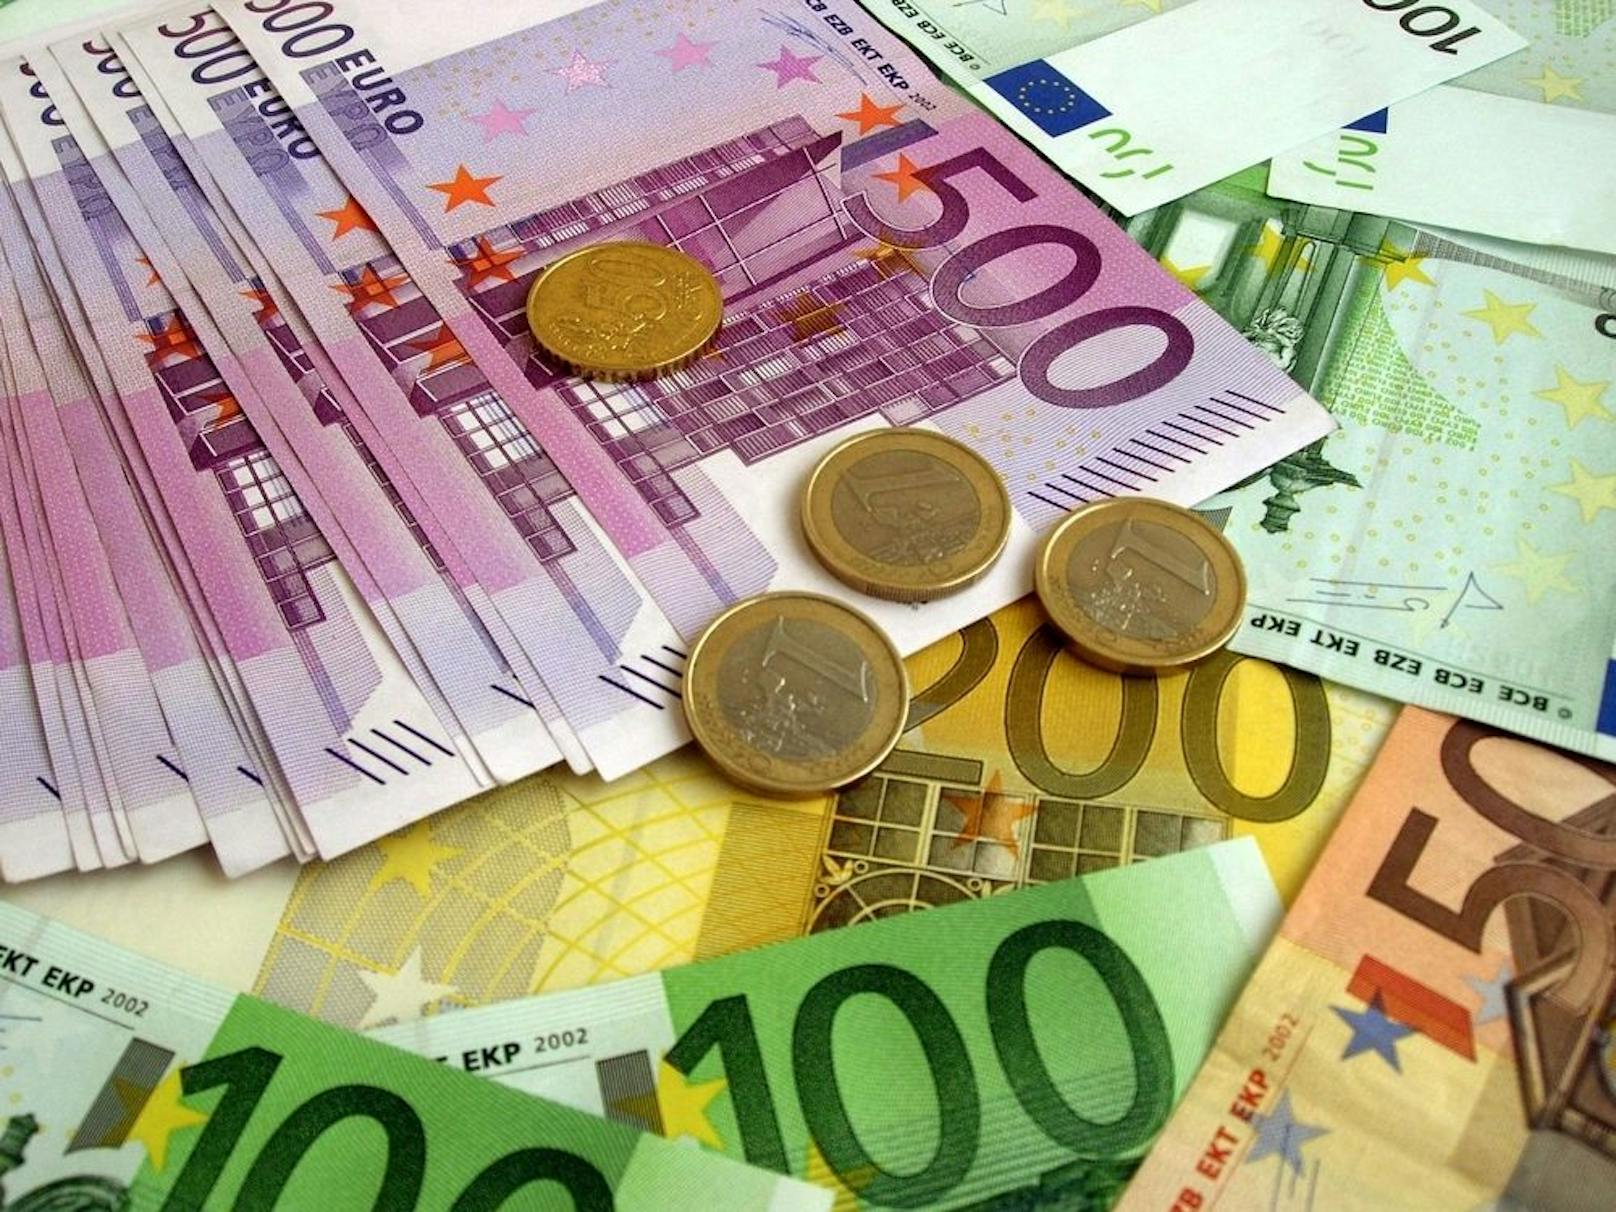 Mann kassierte rechtswidrig 130.000€ an Sozialleistungen